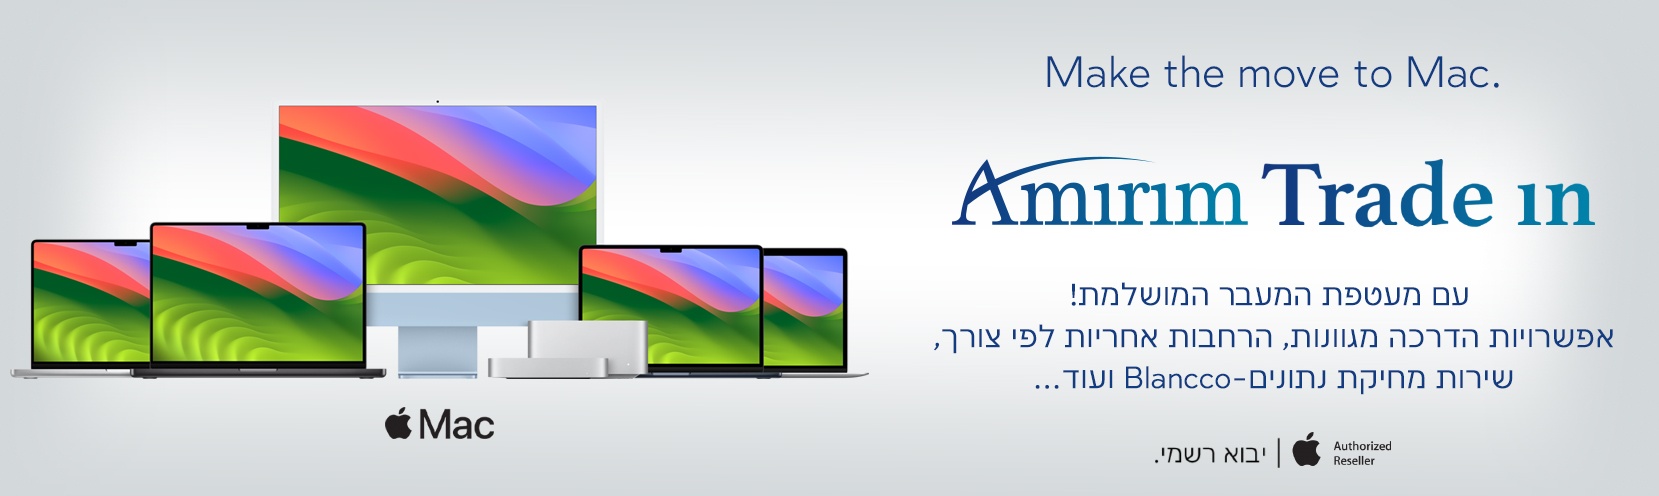 Amirim Trade In Mac לעסקים